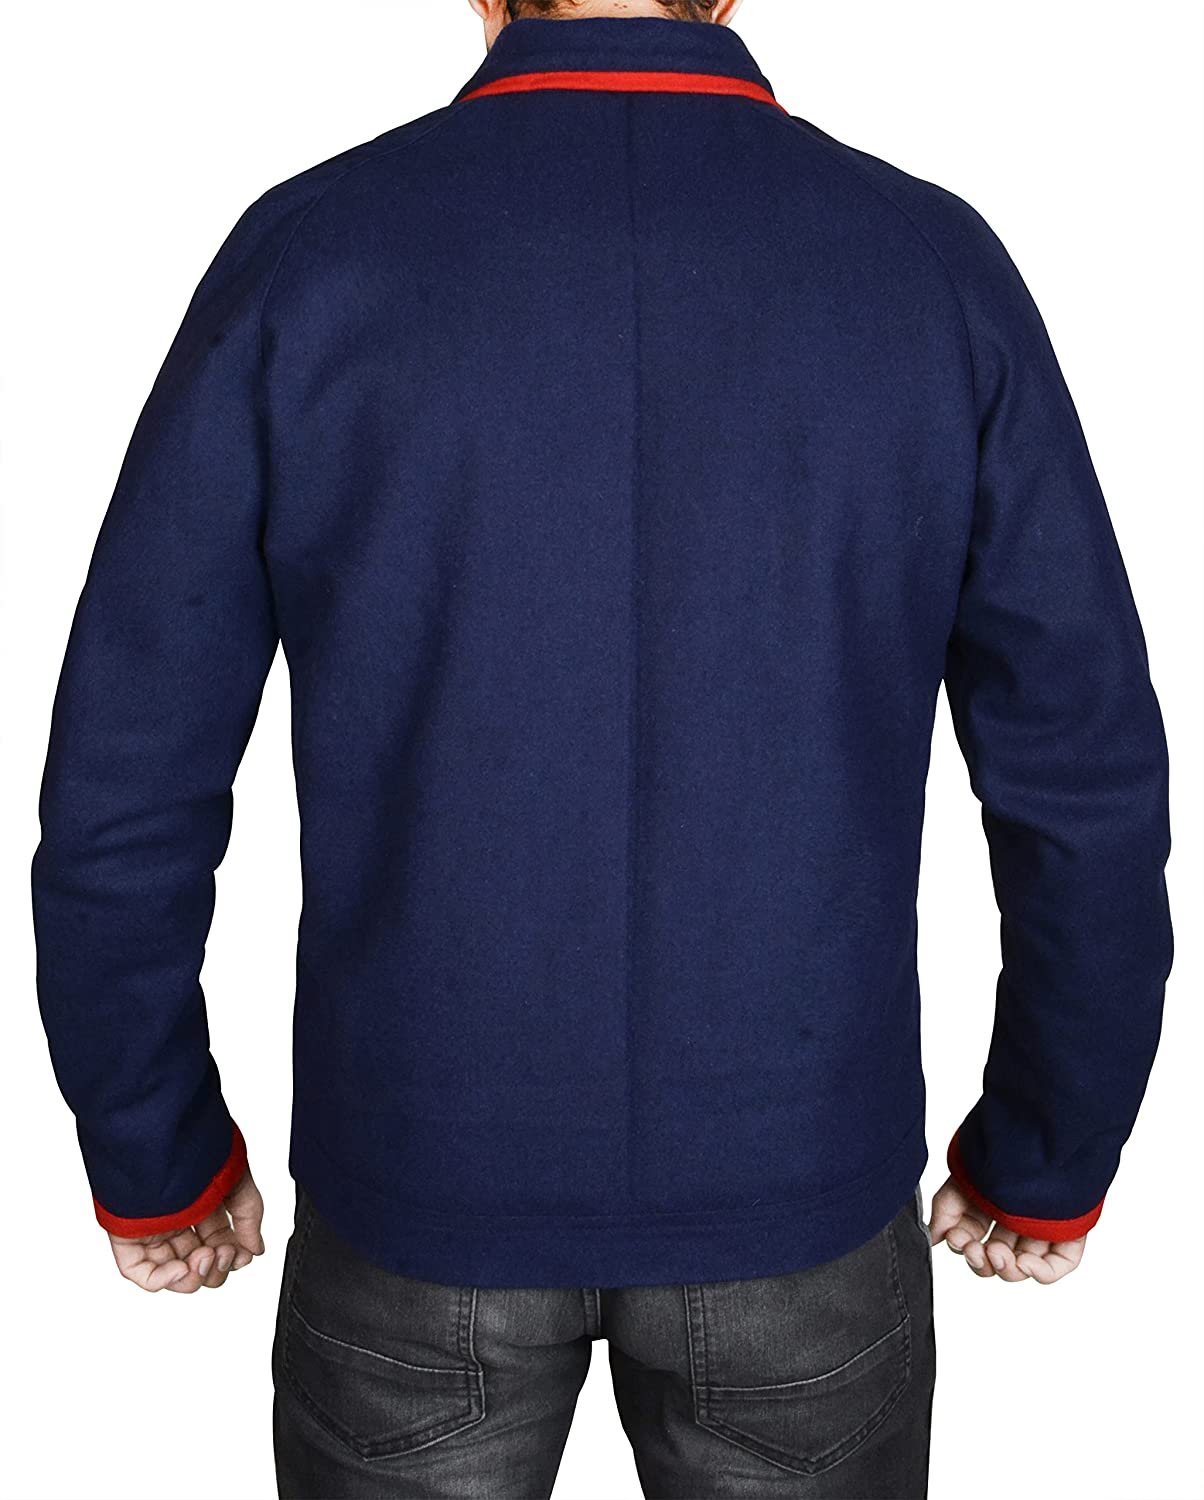 ted-lasso-jason-sudeikis-richmond-jacket-superjackets4